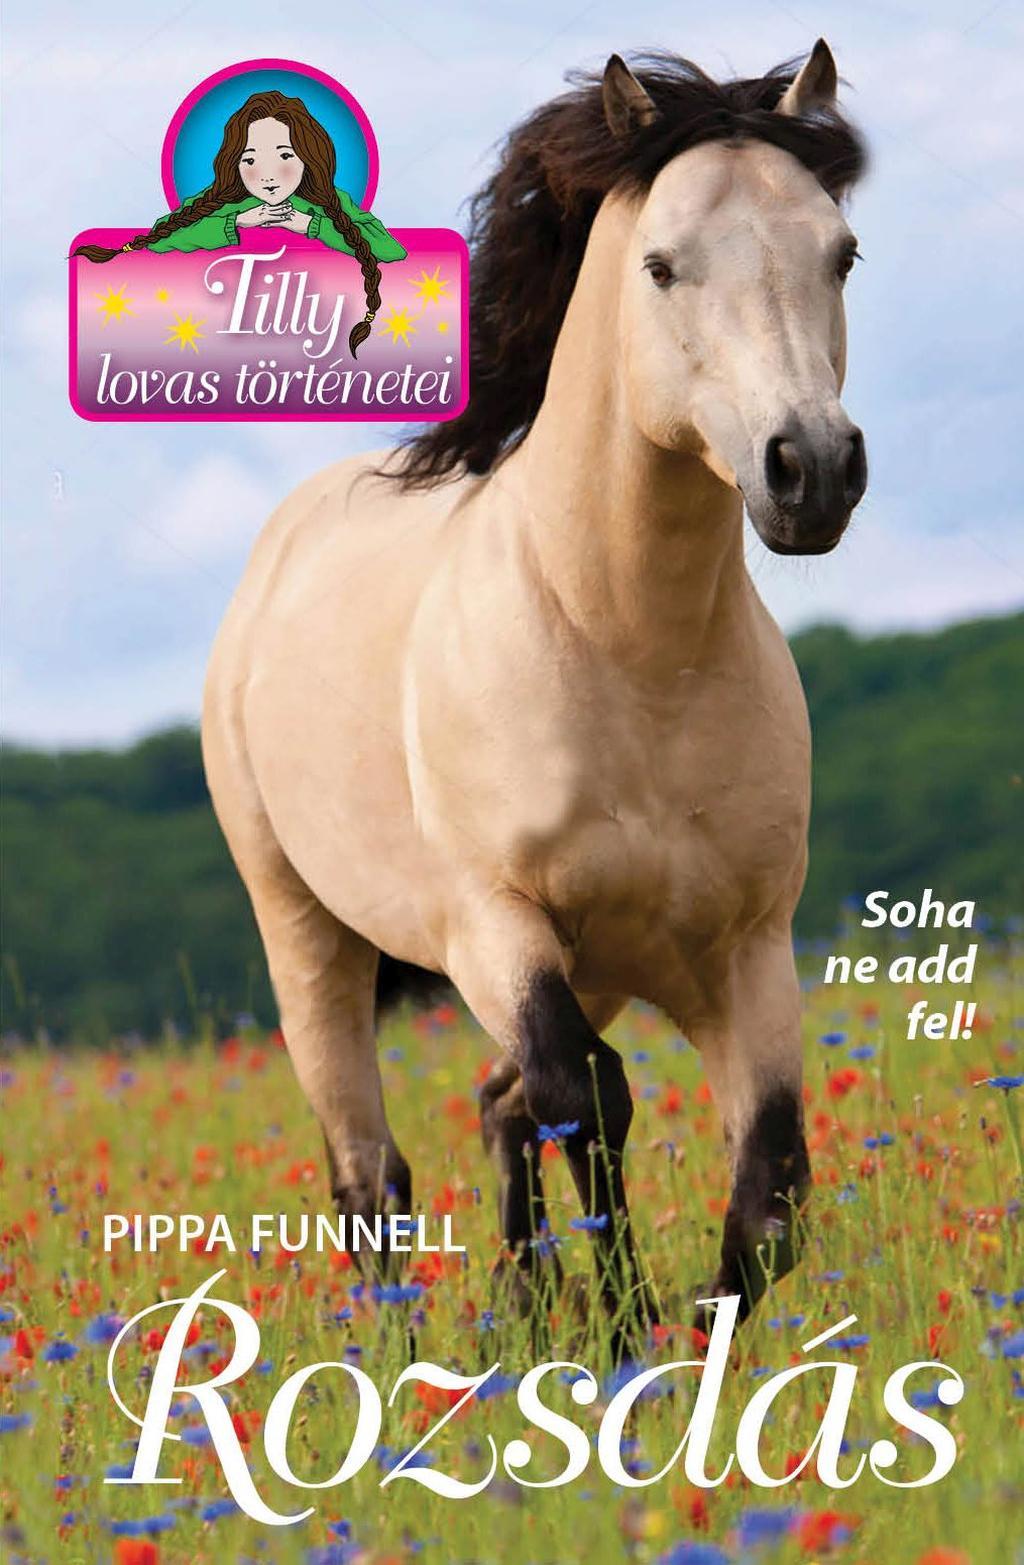 Pippa Funnel - Tilly lovas történetei 15. - Rozsdás